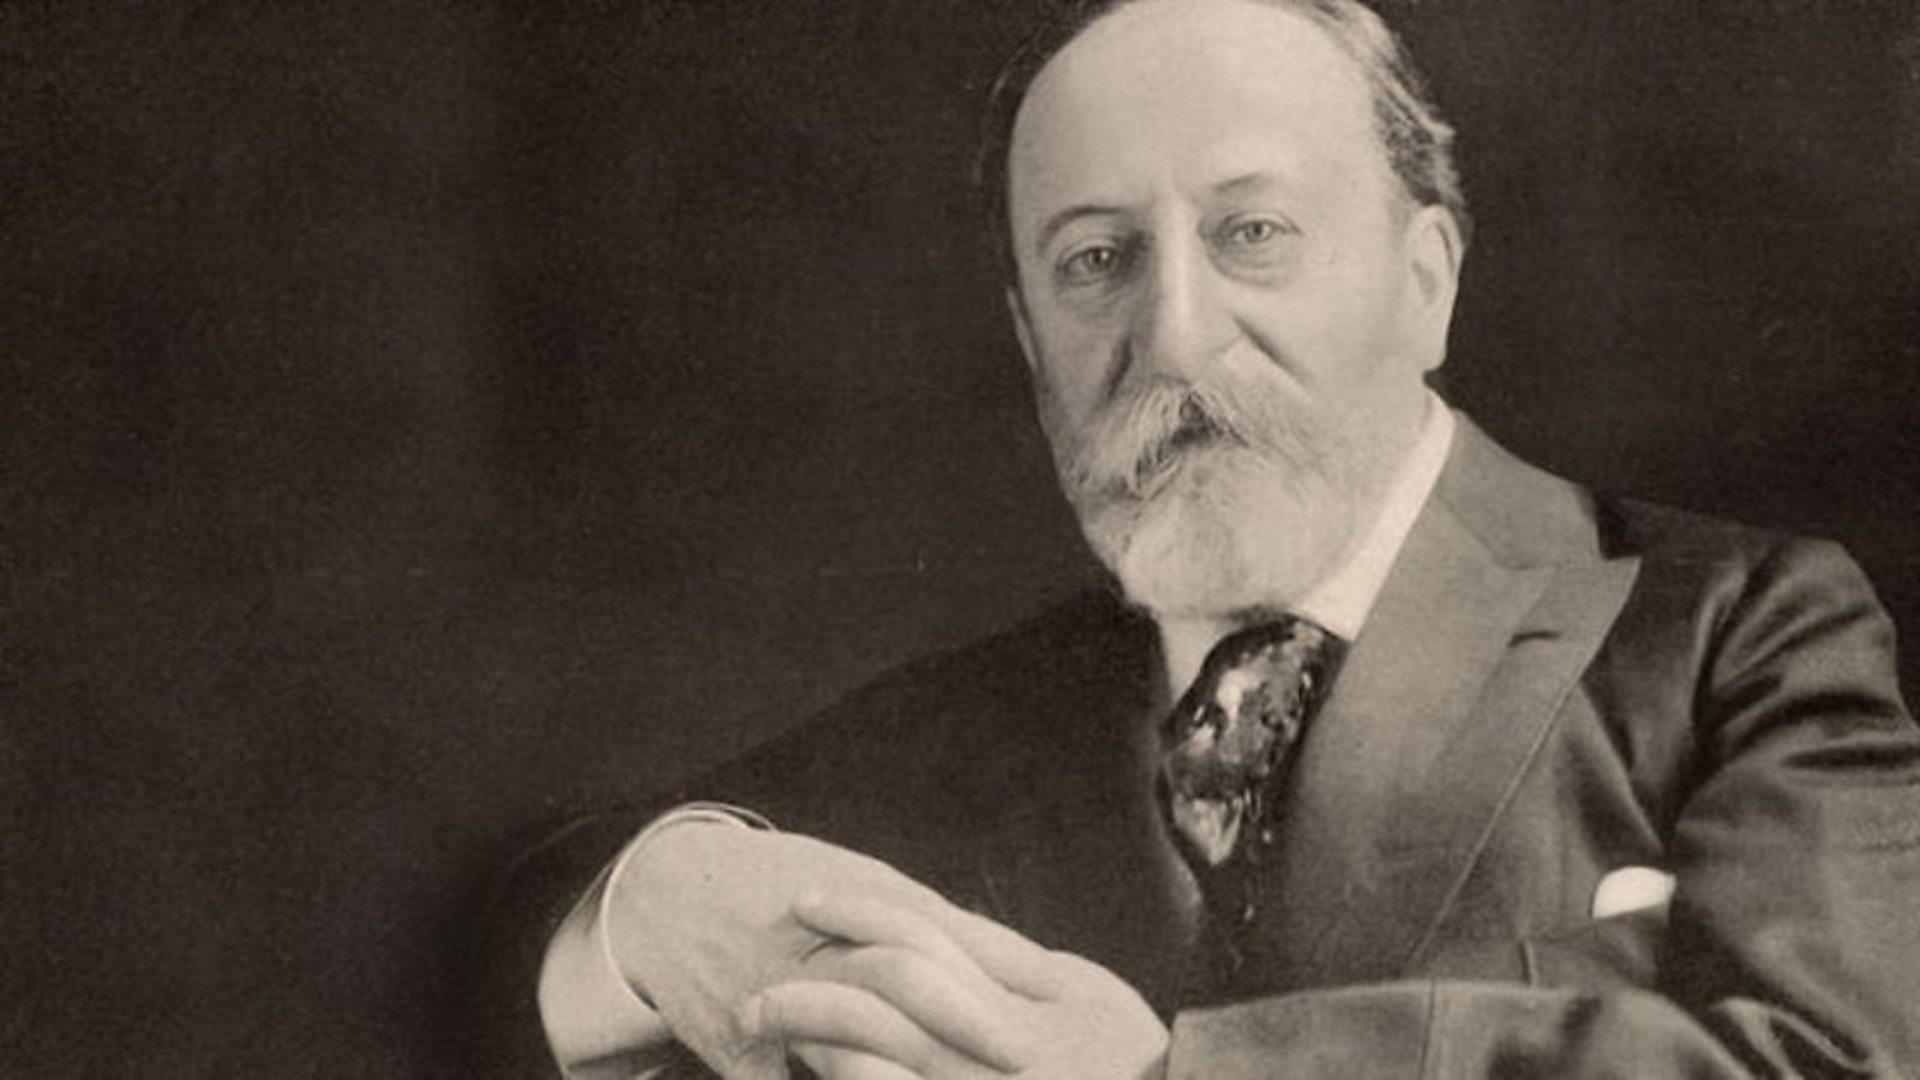 Saint-Saëns 1909 interview: My royal pardon